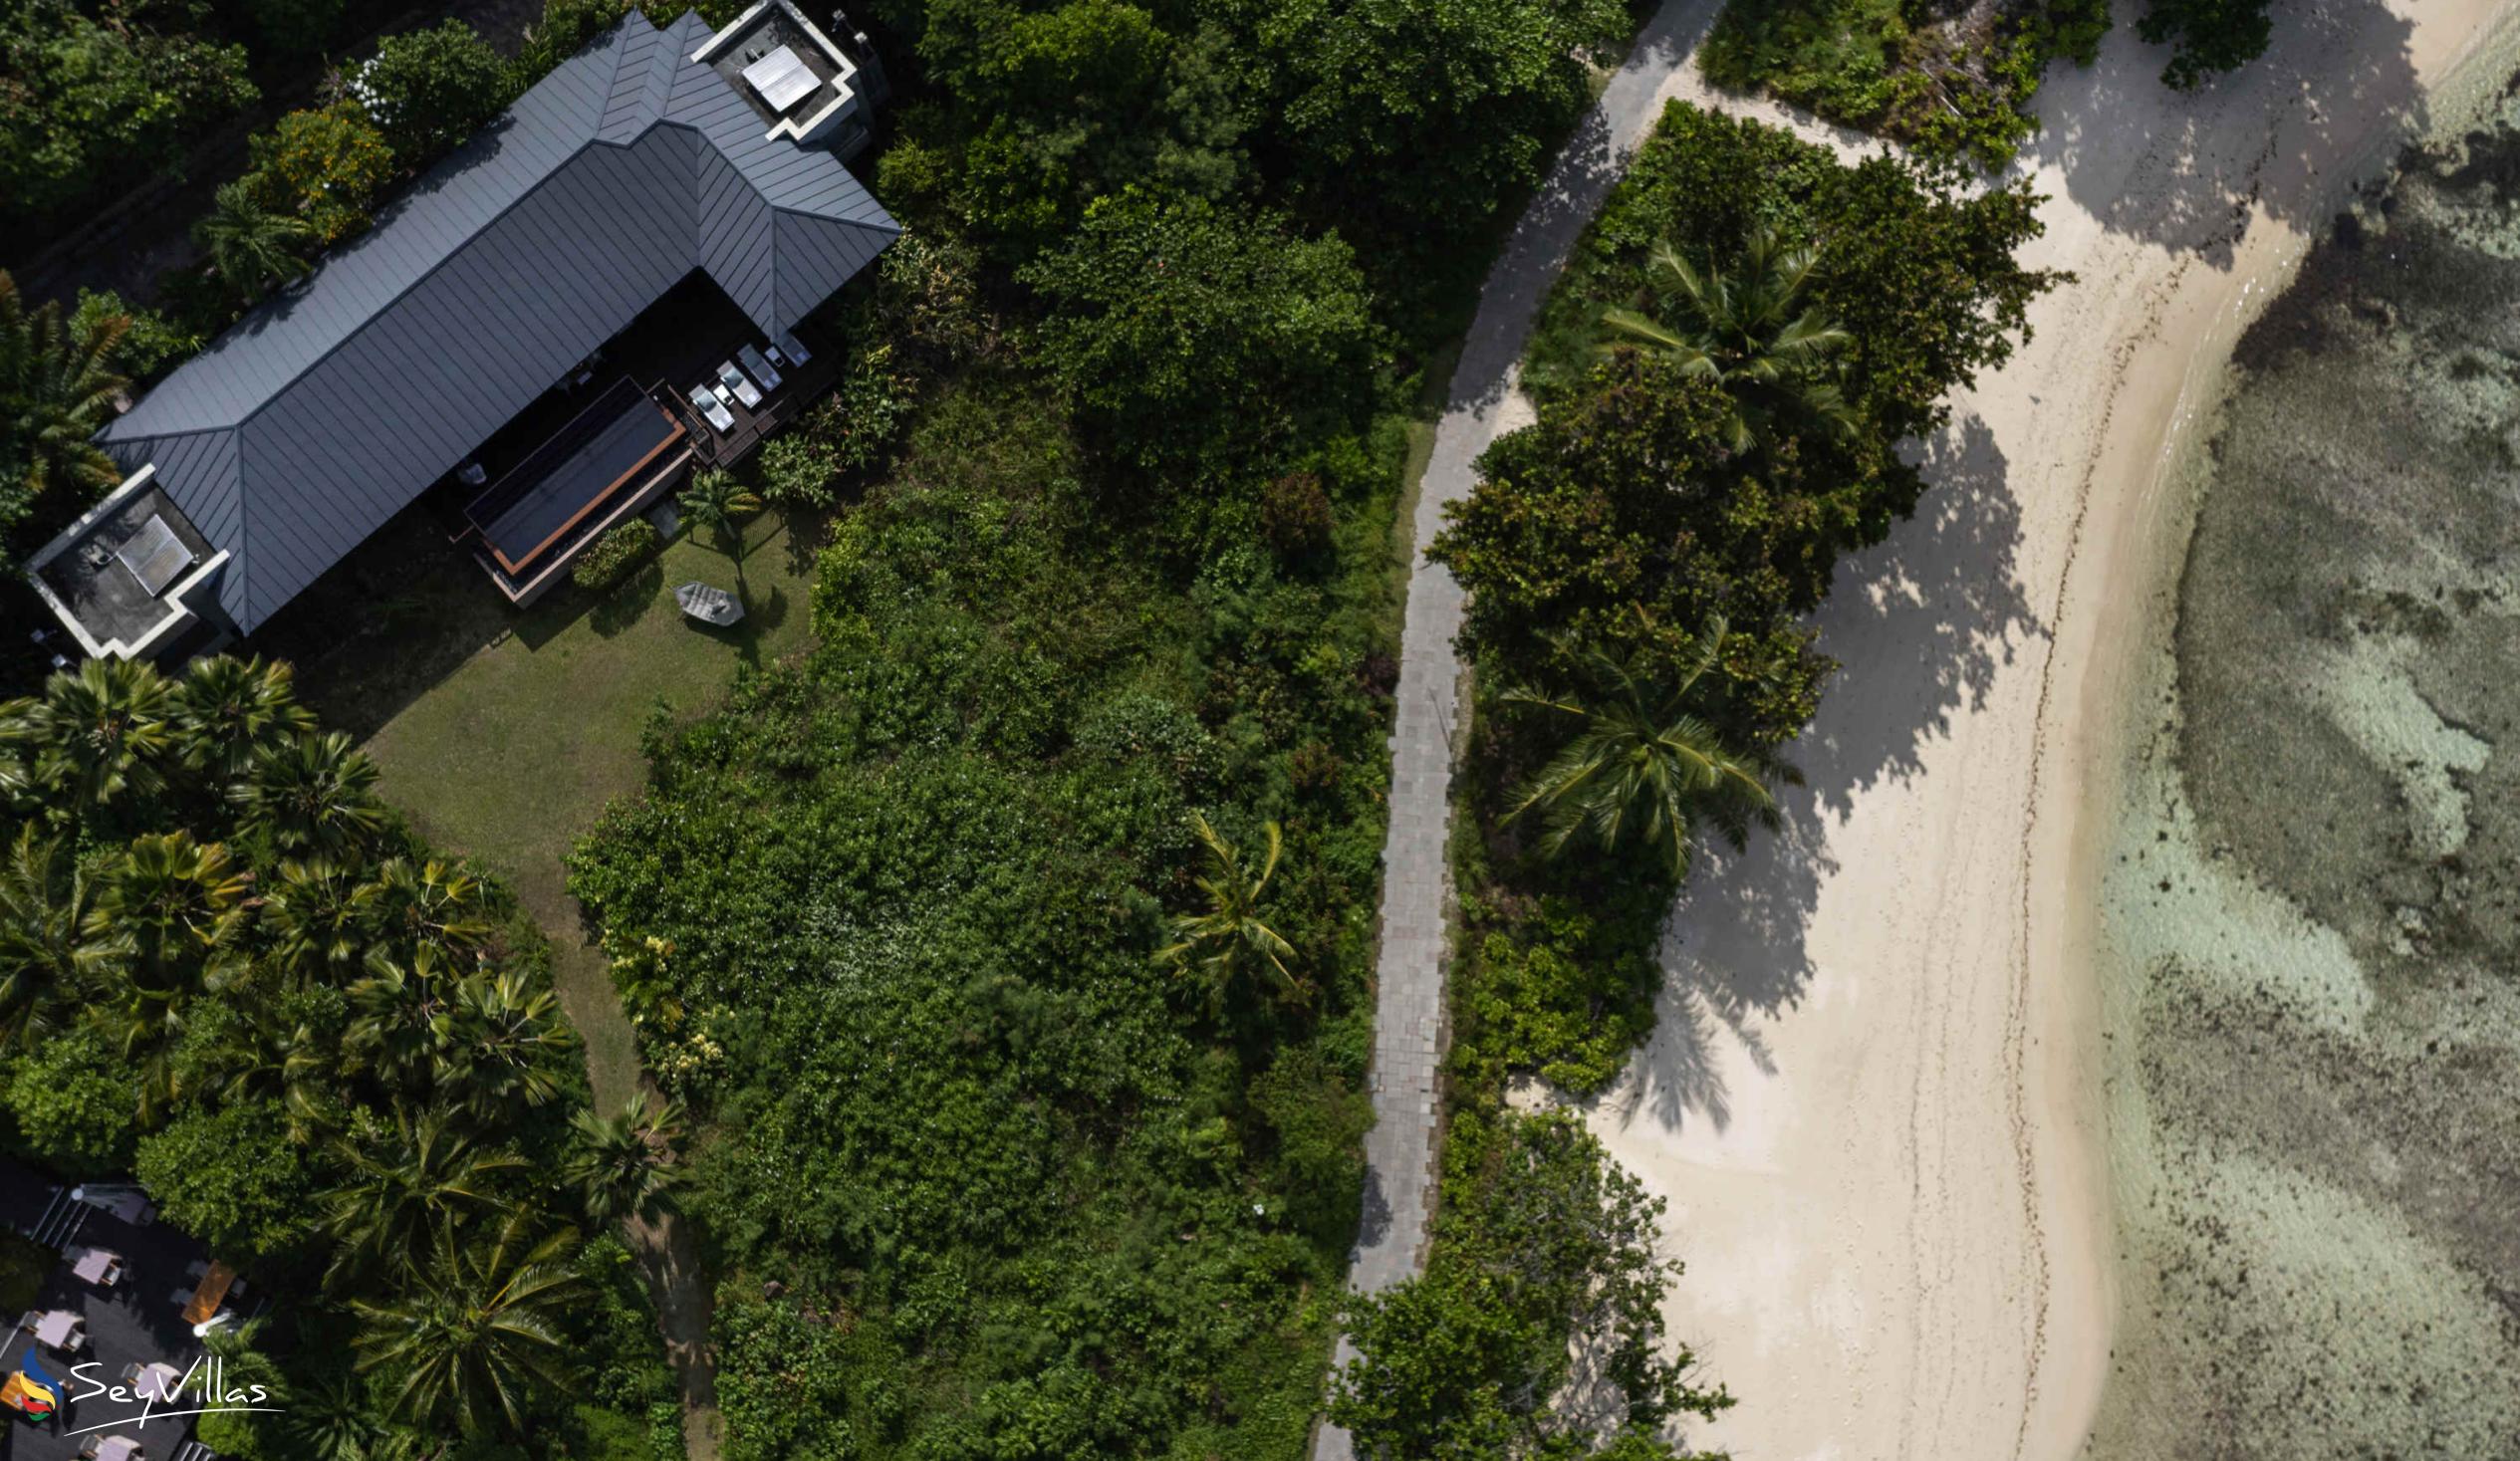 Photo 136: Raffles - 2-Bedroom Beachfront Pool Villa - Praslin (Seychelles)